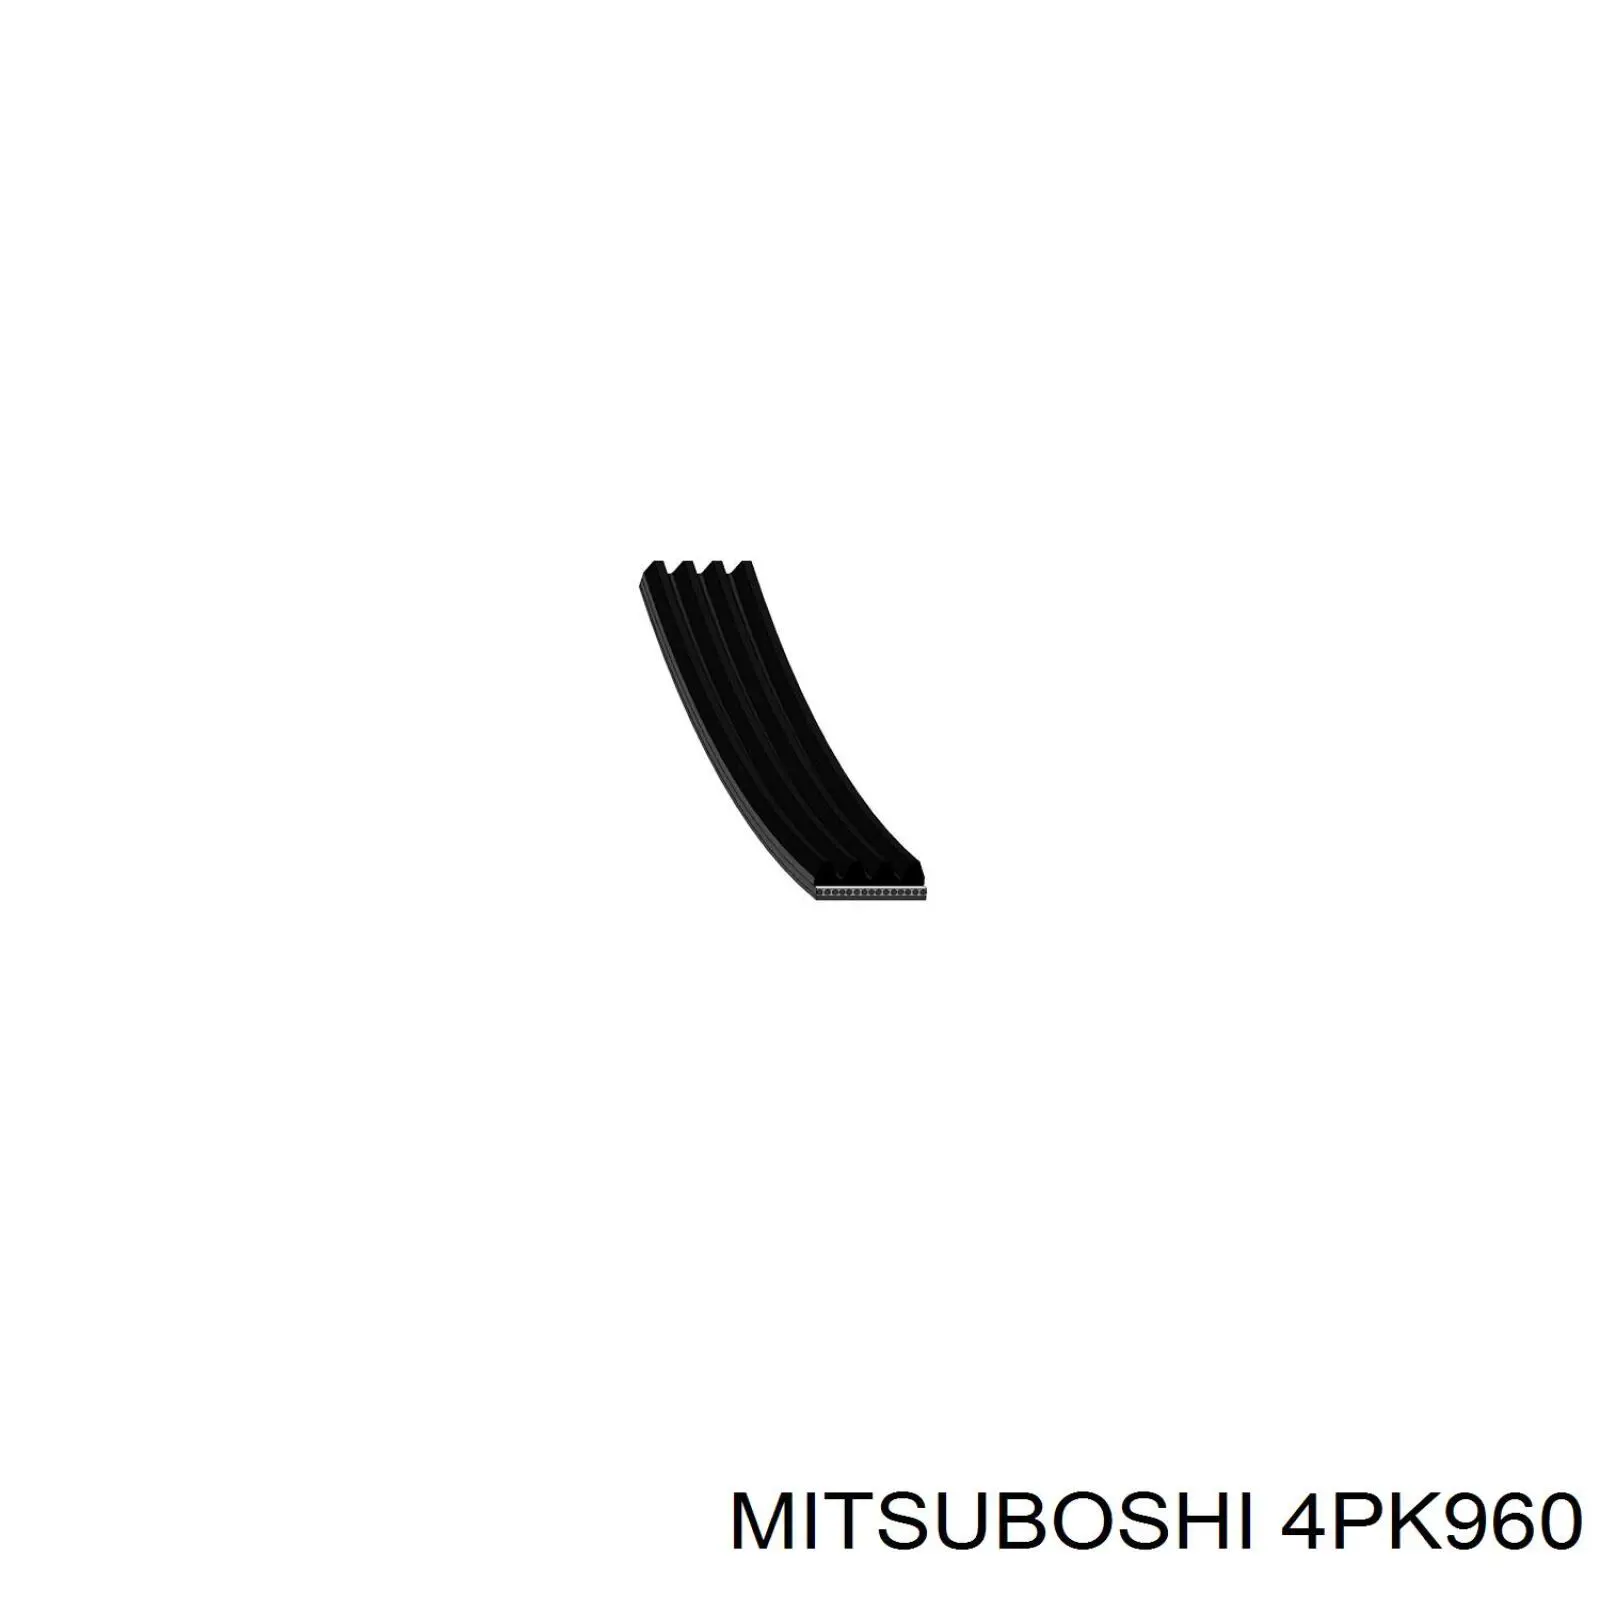 4PK960 Mitsuboshi ремень генератора